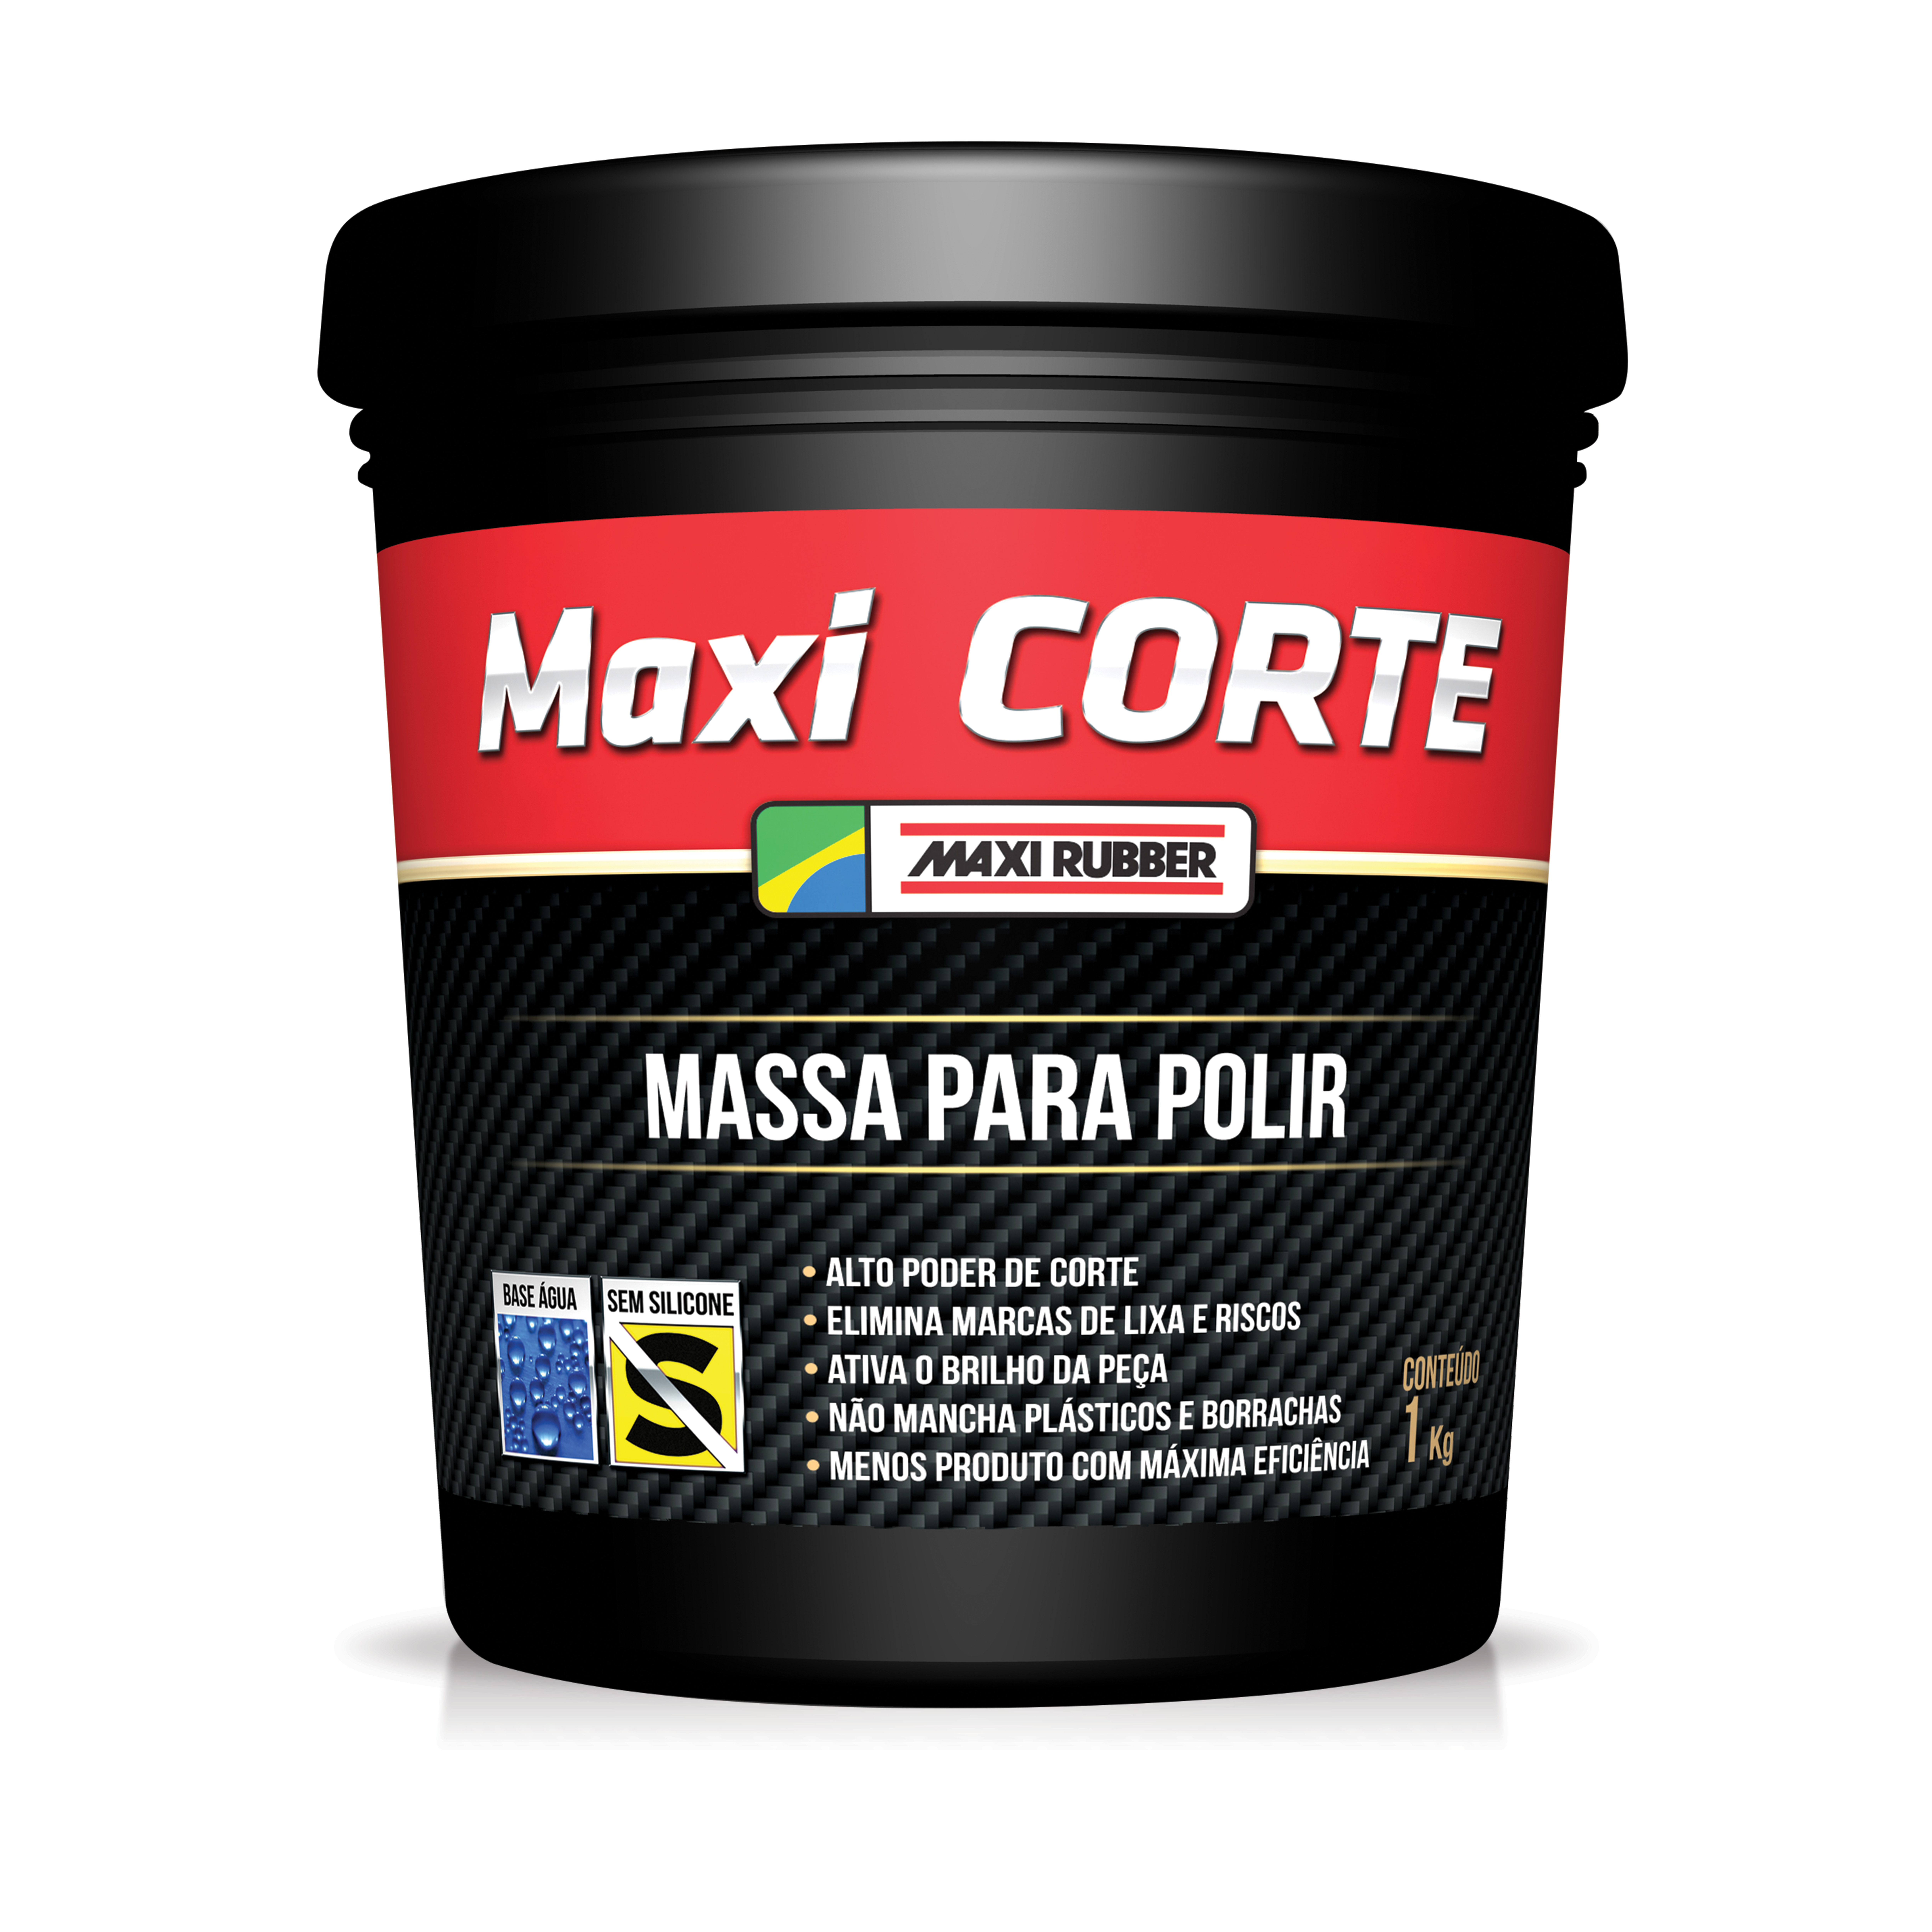 Maxi Corte - Massa para polir 